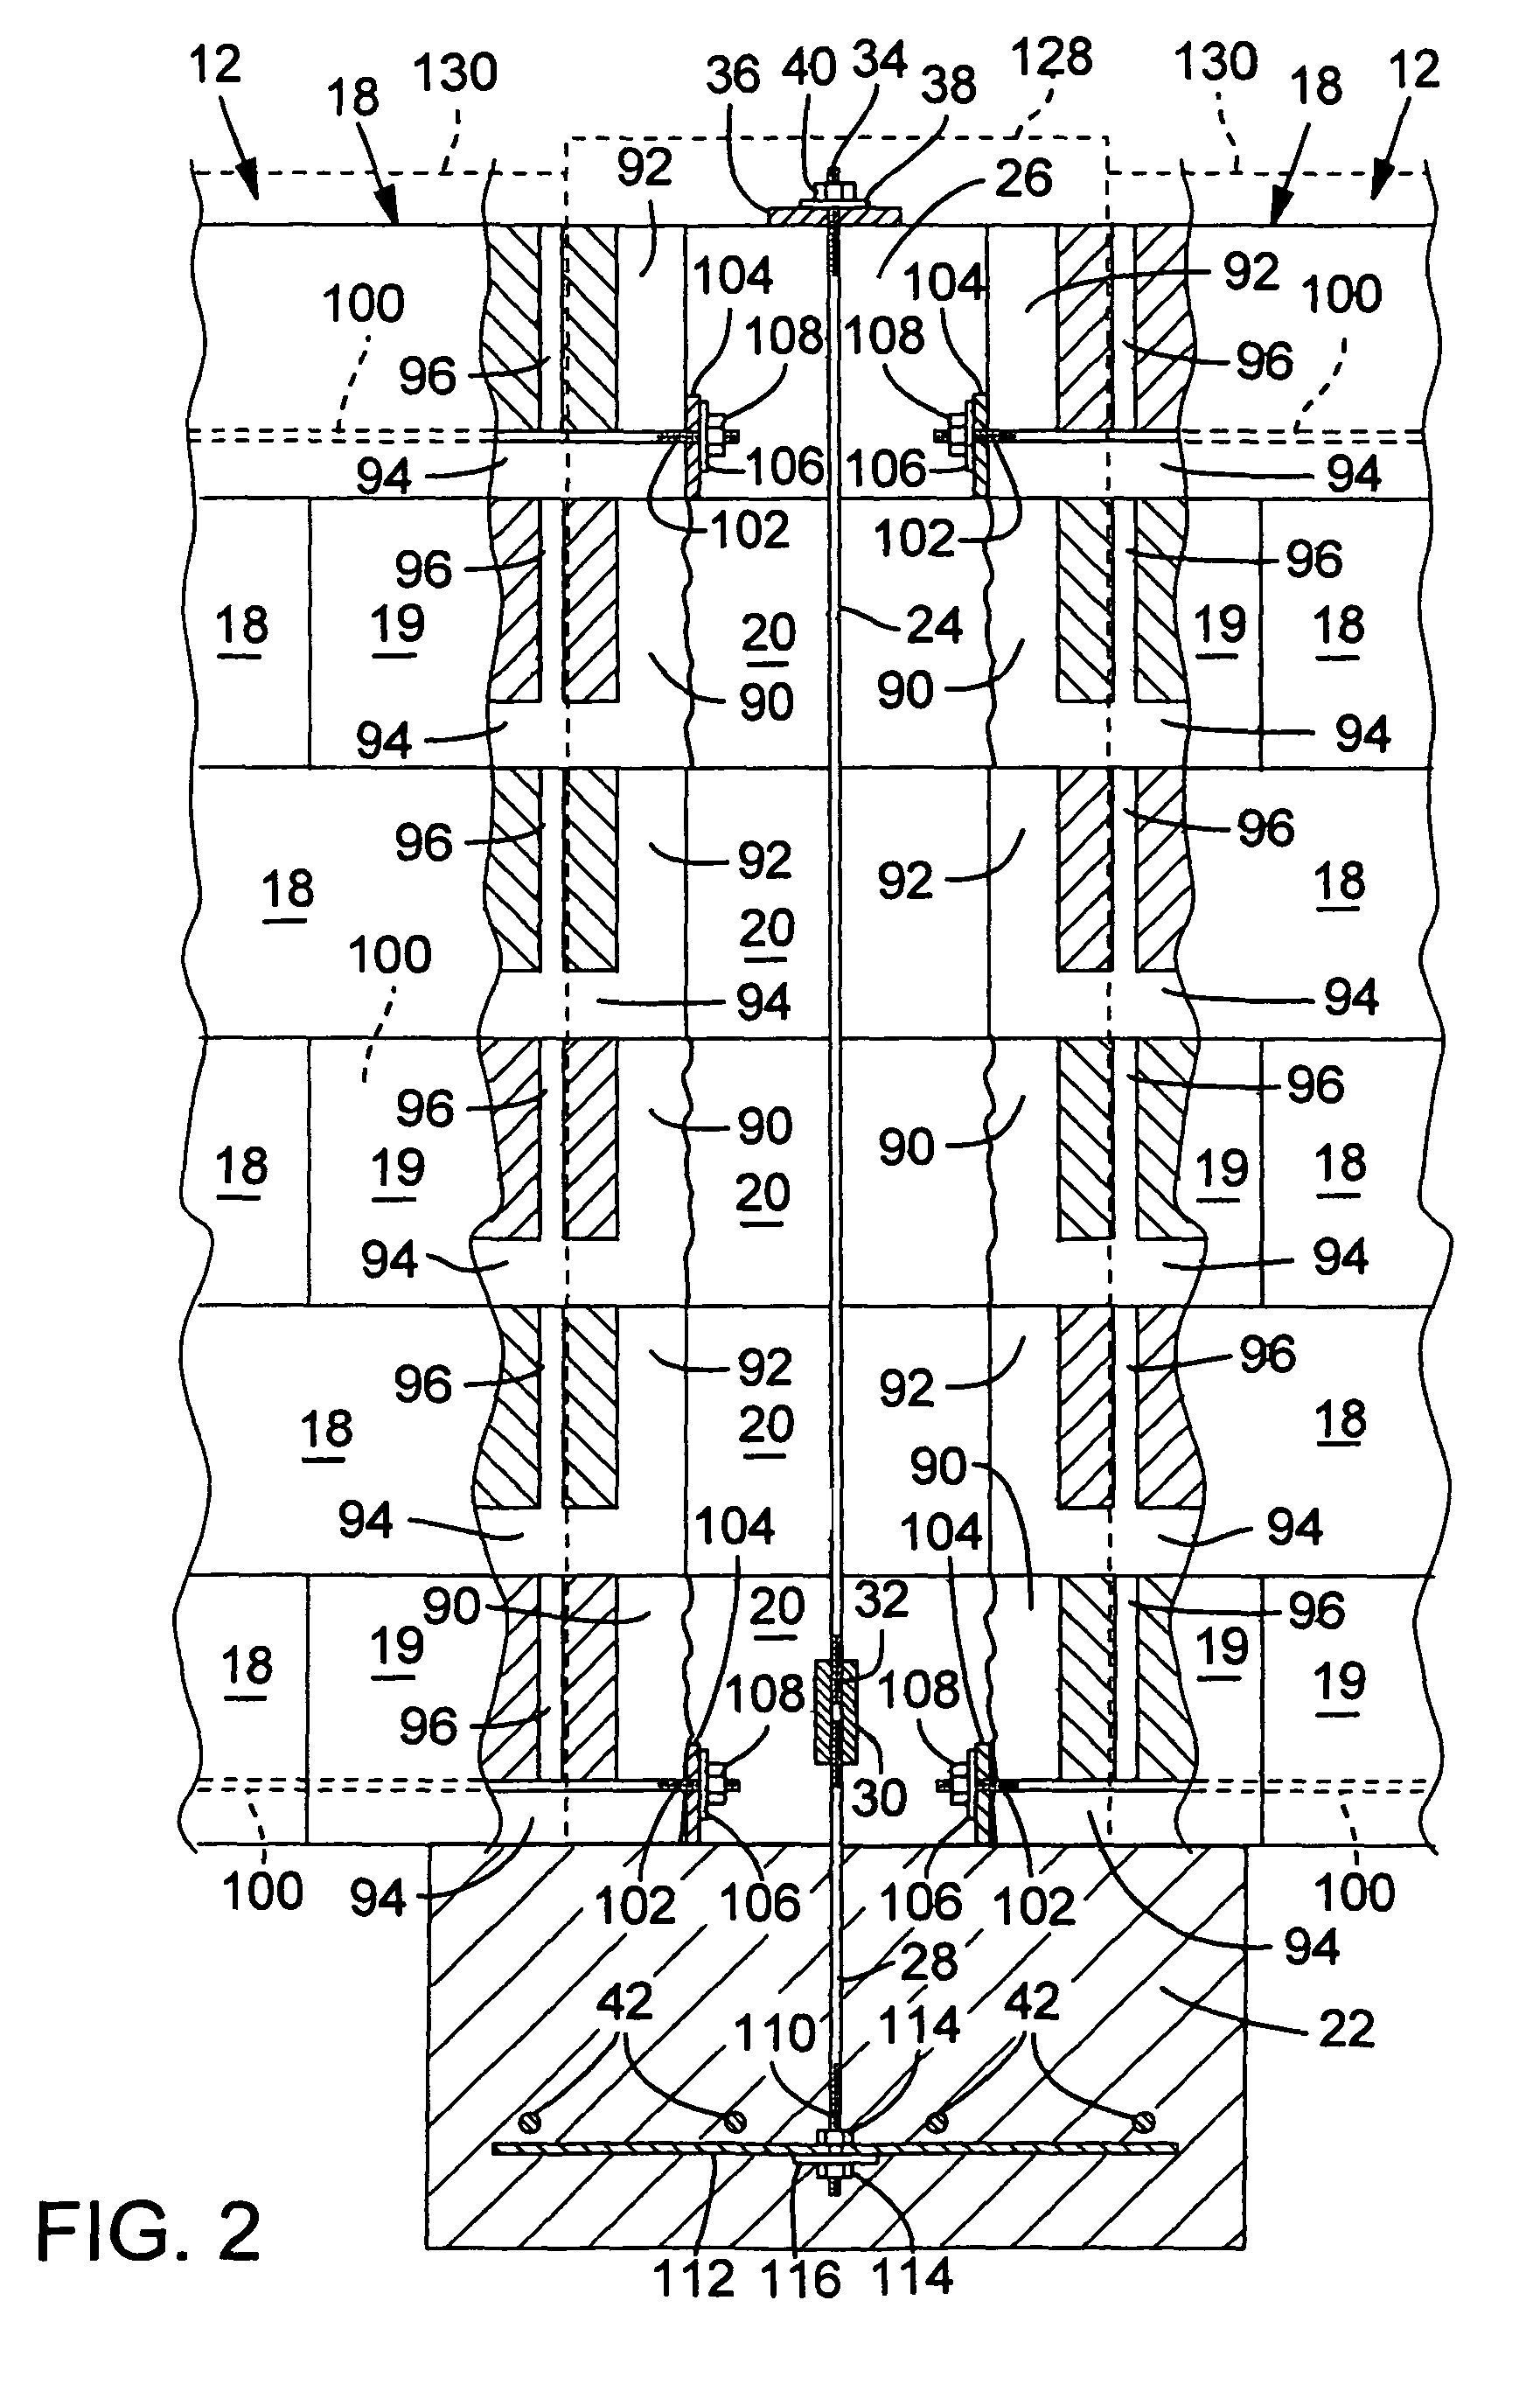 Masonry block wall system